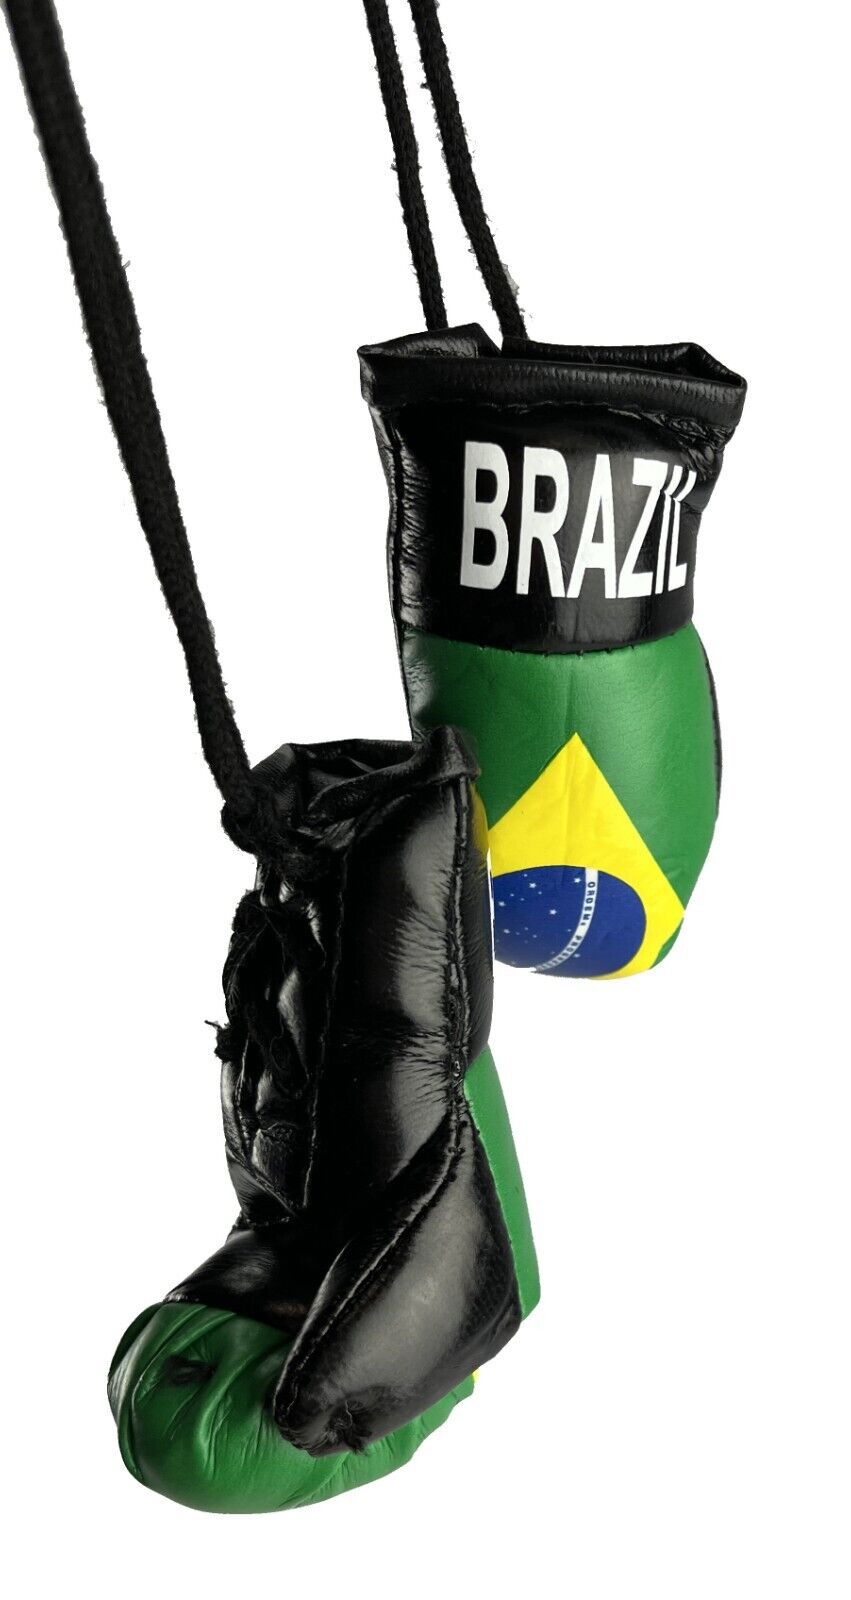 Lot of 100 Mini Boxing Gloves Wholesale BRAZIL National Pride MMA Boxing Gloves